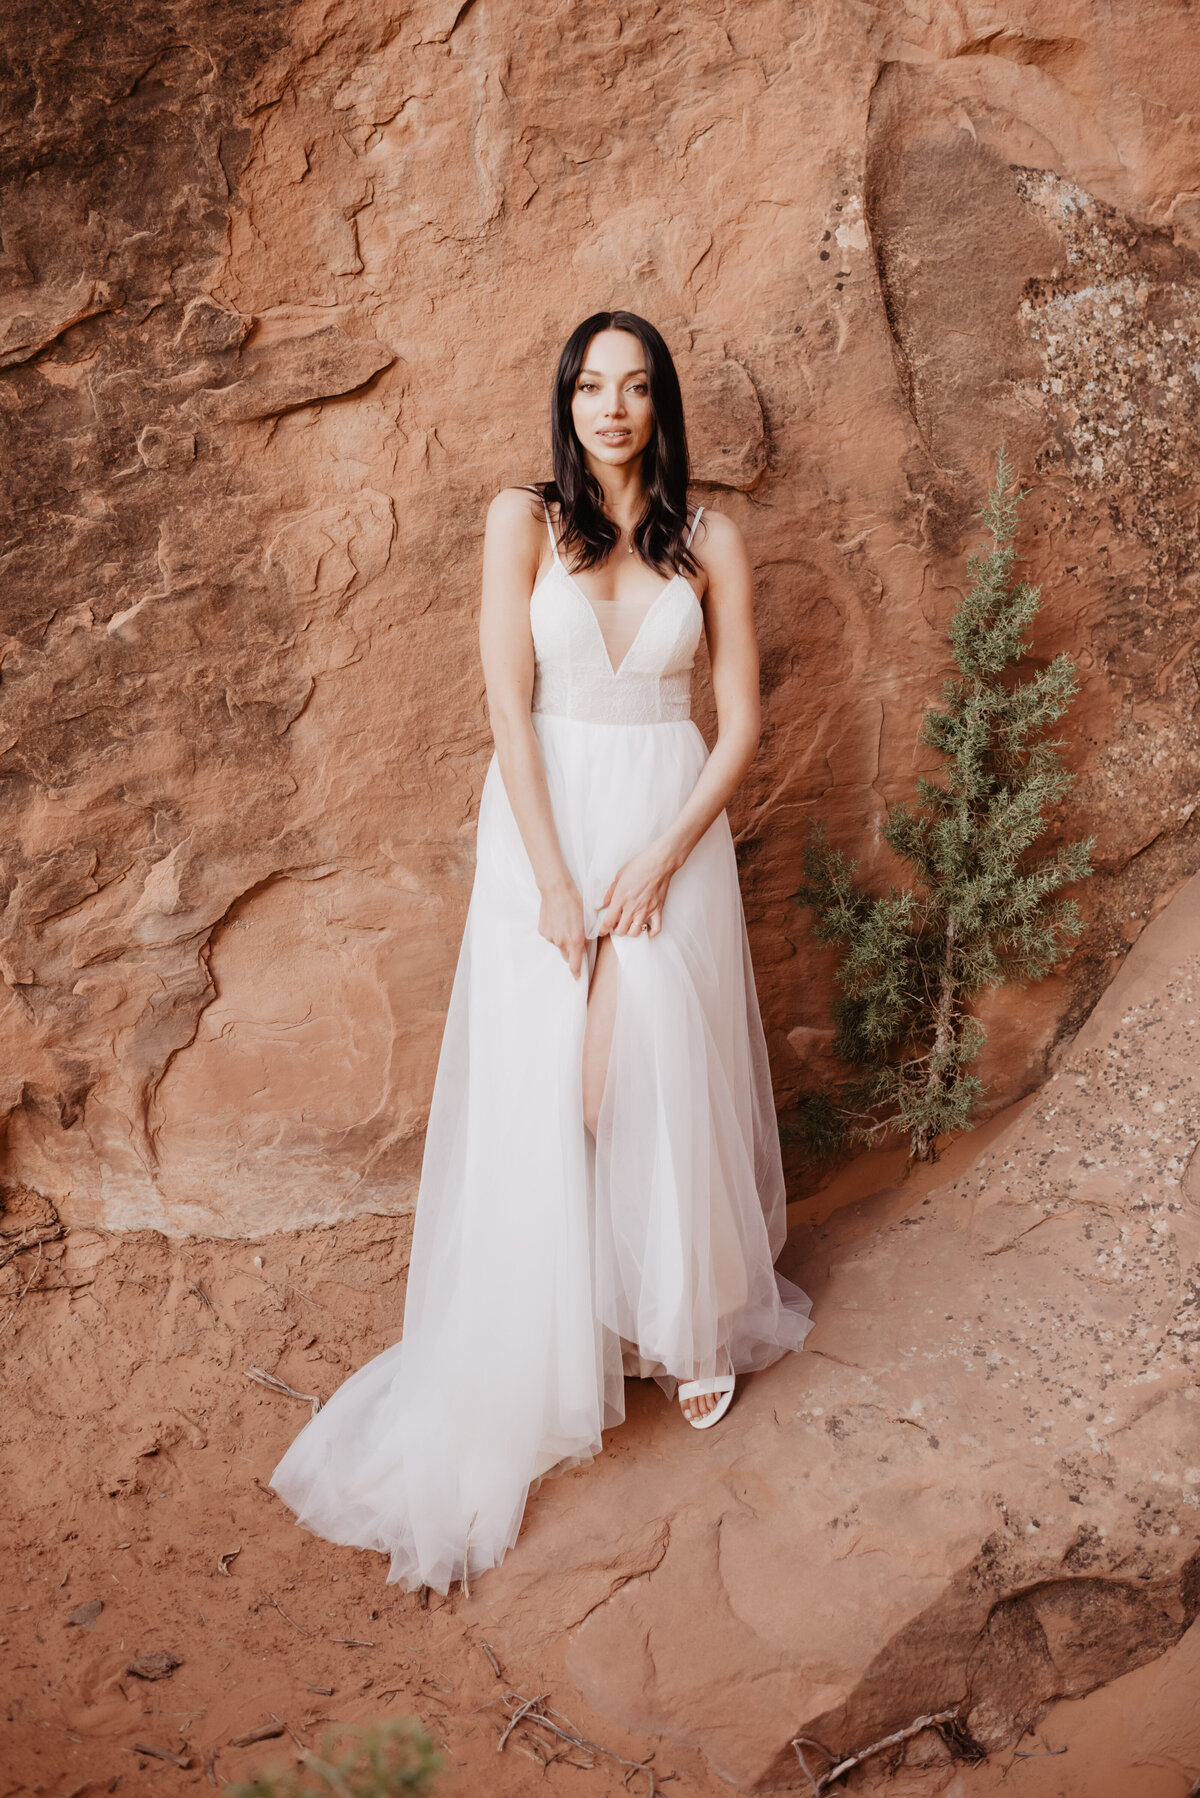 Utah elopement photographer captures bride smiling during bridal portraits